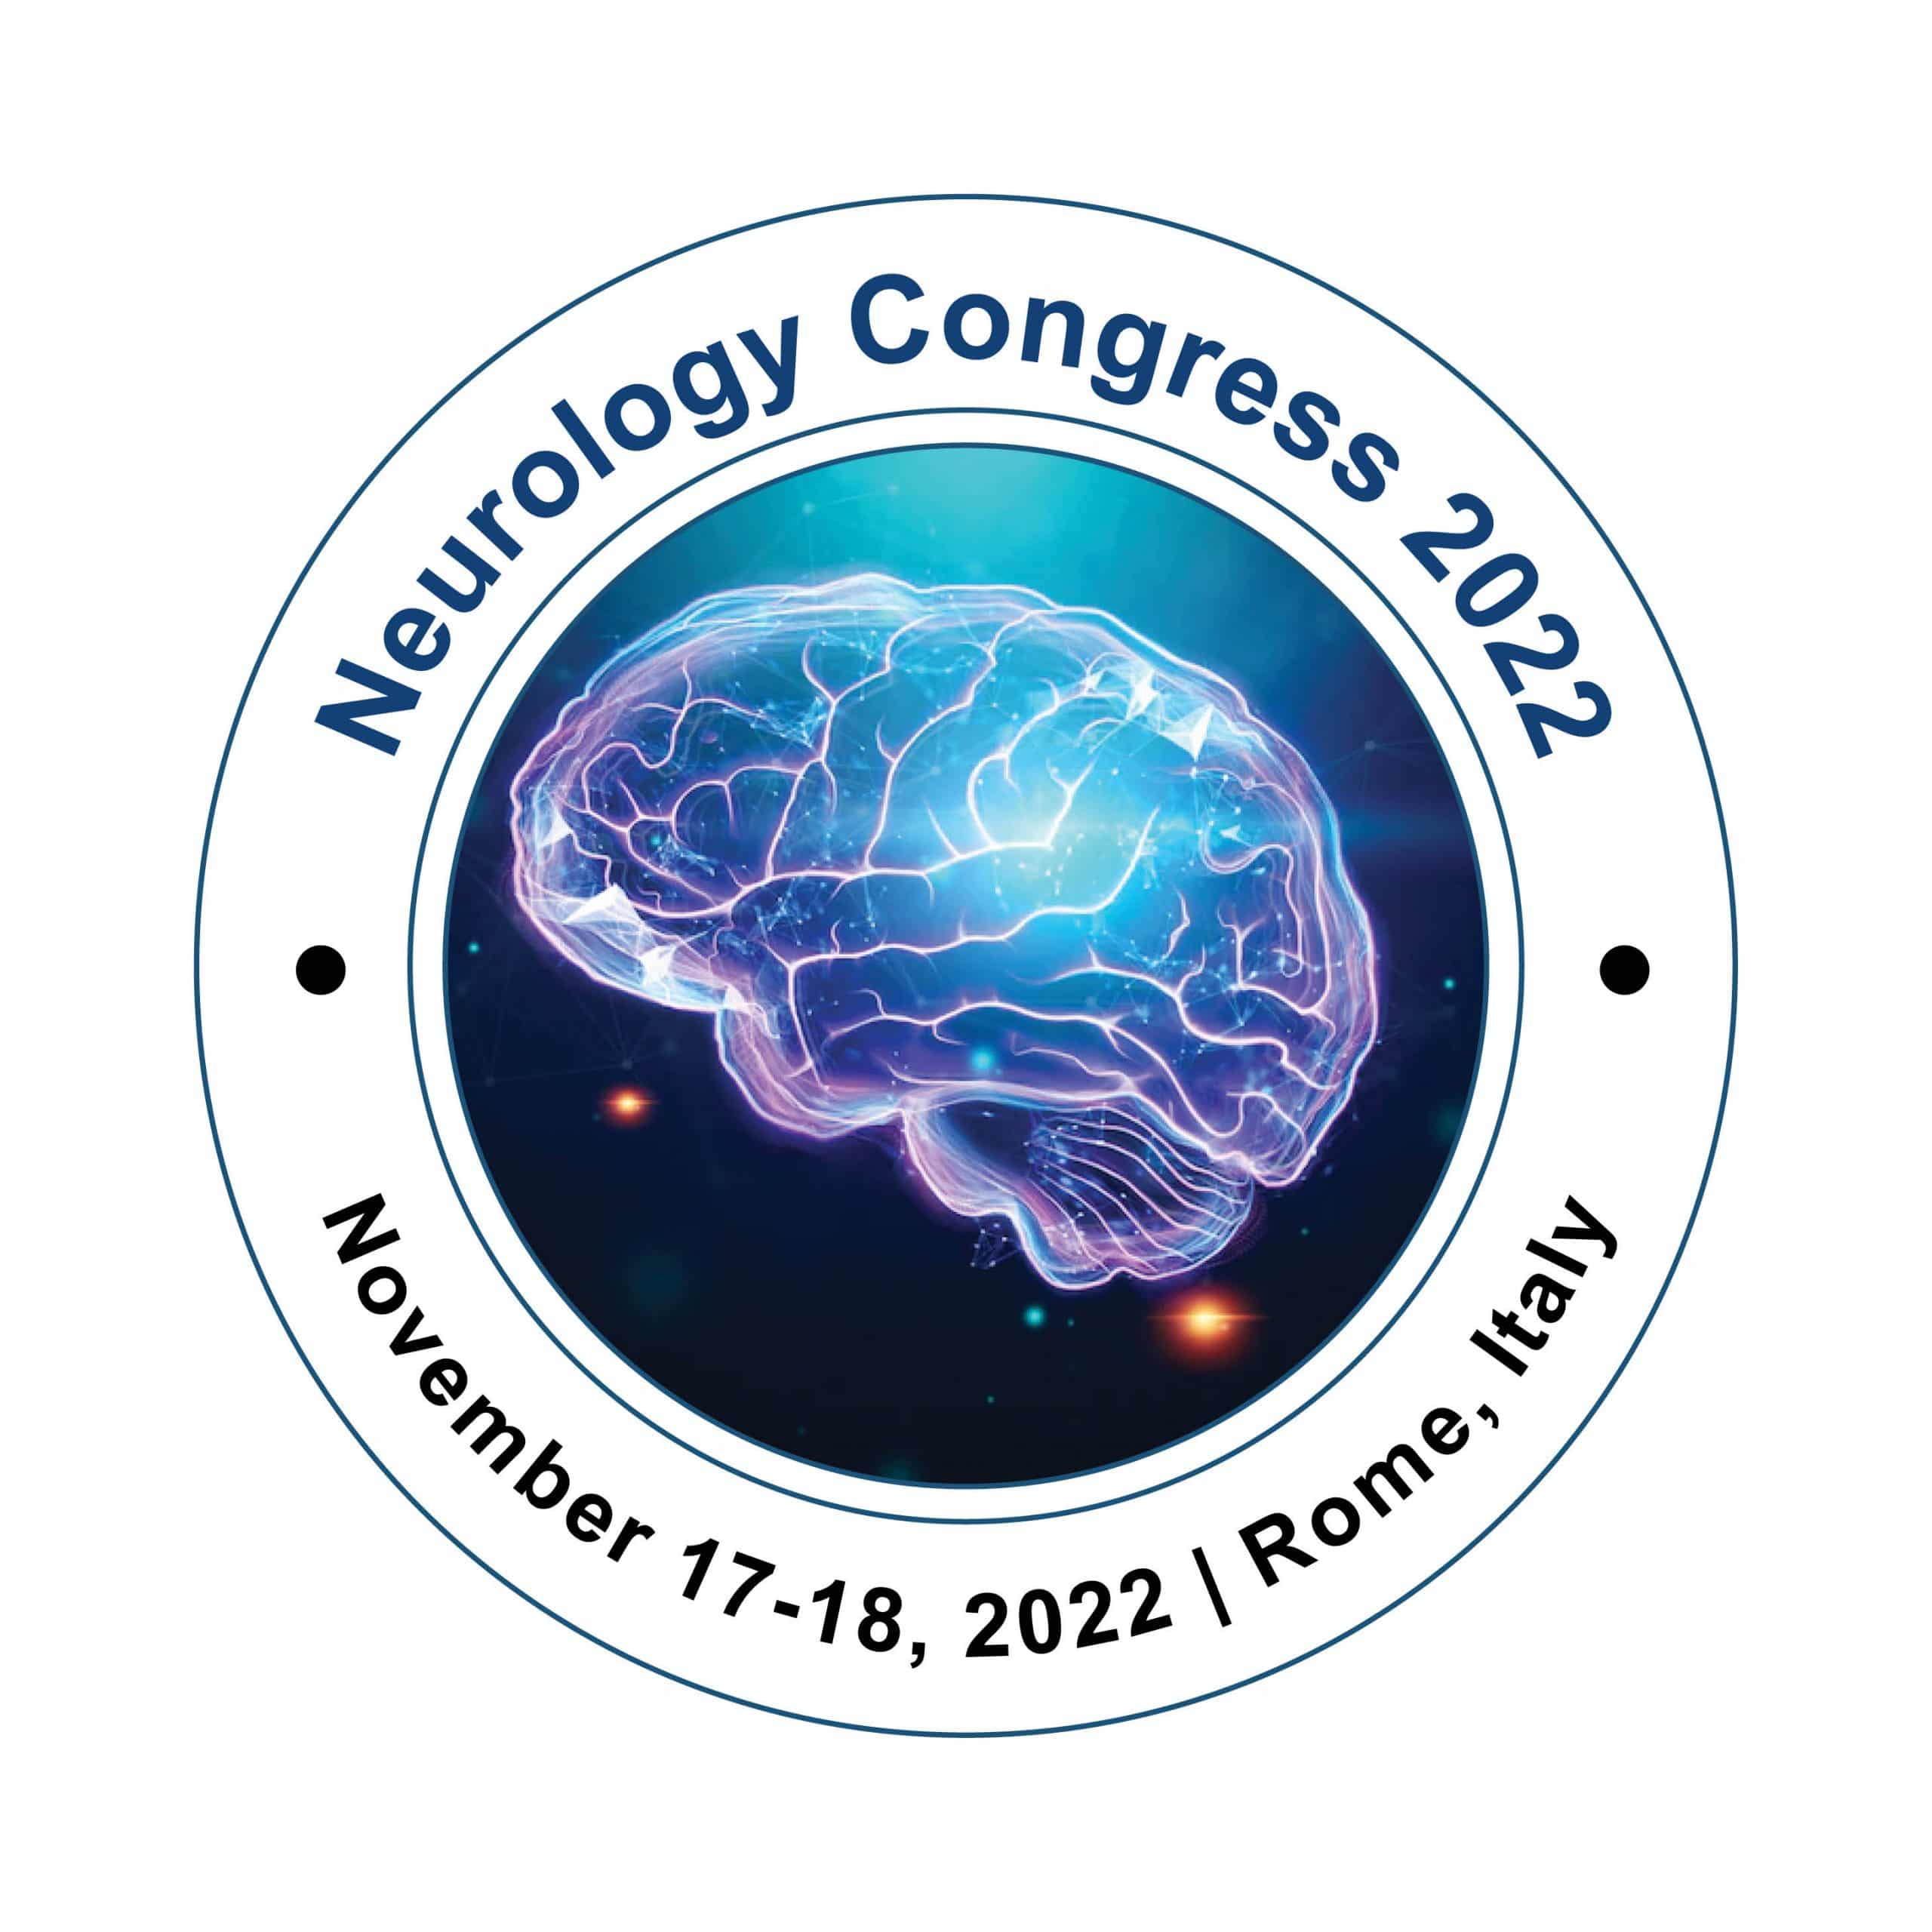 6th European Congress on Neurology and Brain Disorders